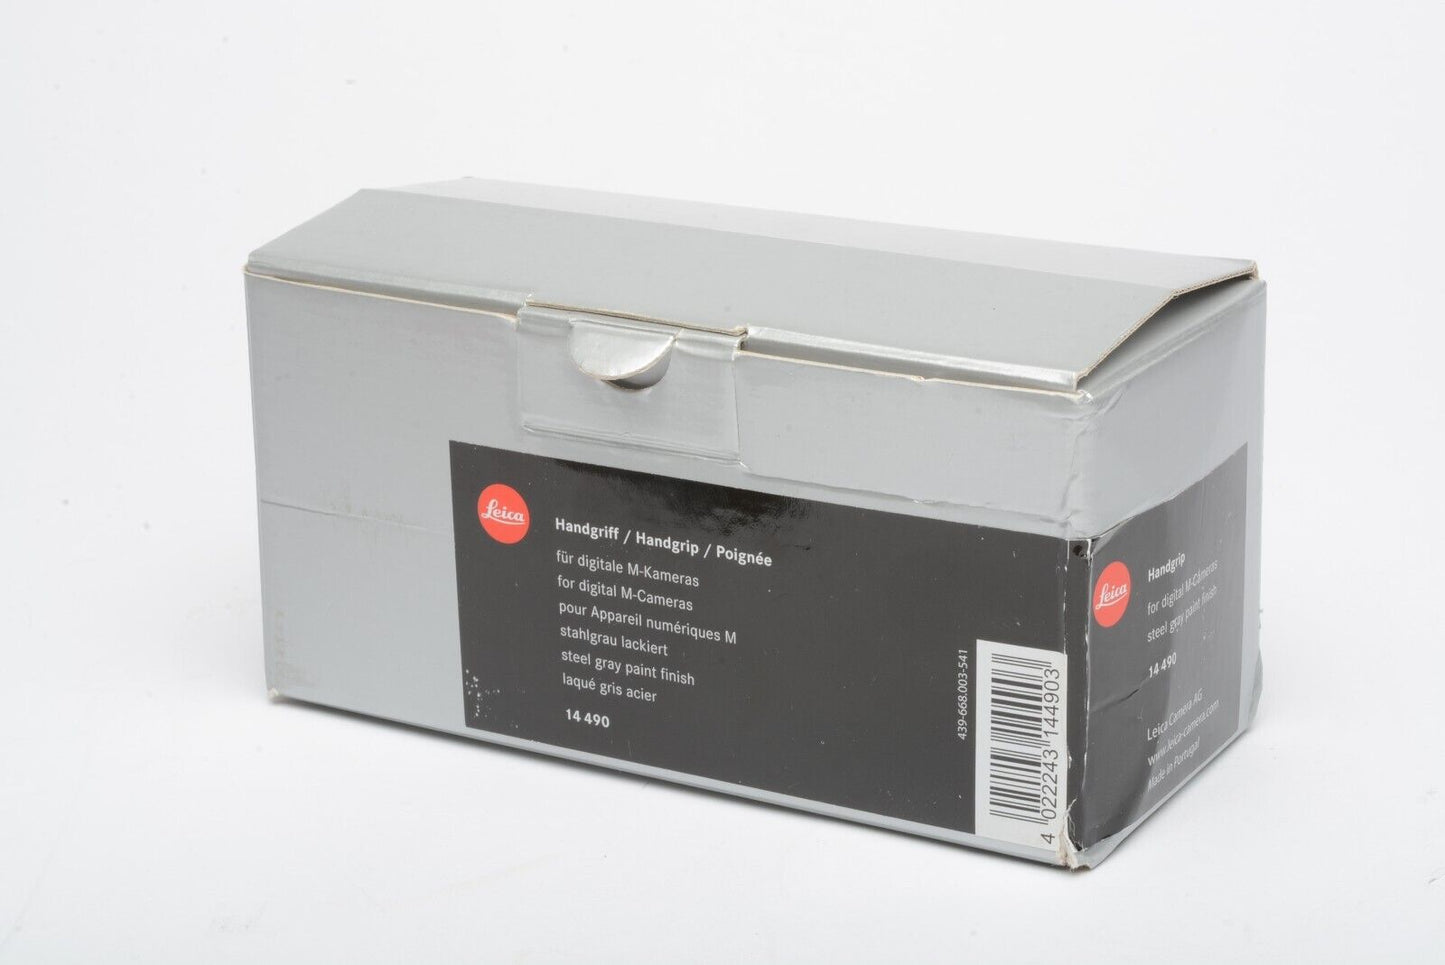 Genuine Leica Handgrip Steel Gray #14490 For Leica M9 Body, Boxed